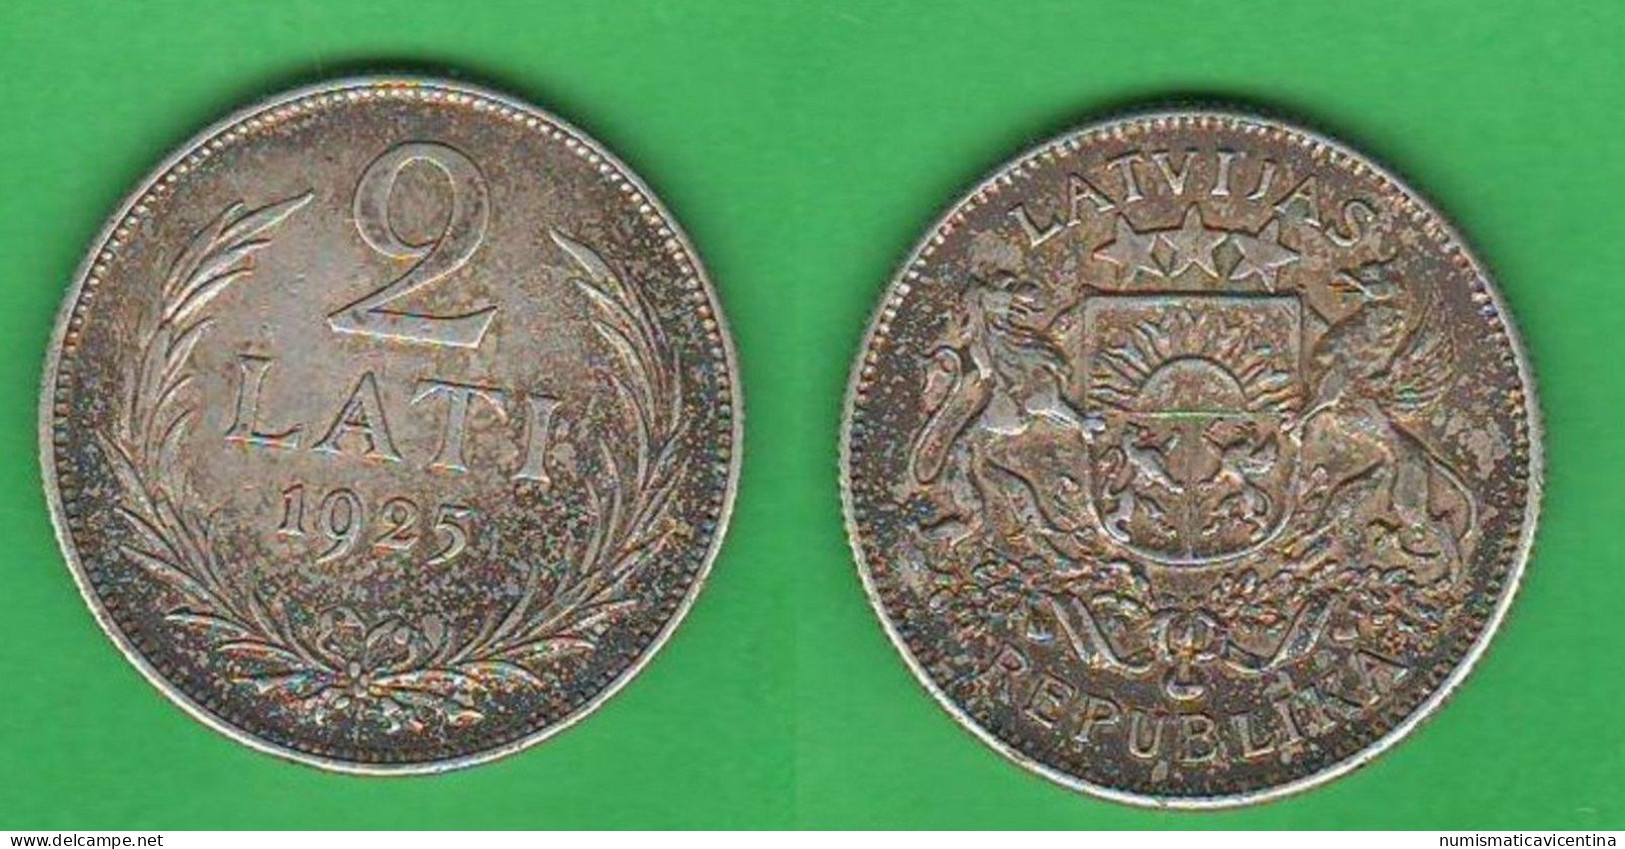 Lettonia 2 Lati 1925 Latvia Latvija Lettonie Silver Coin - Latvia